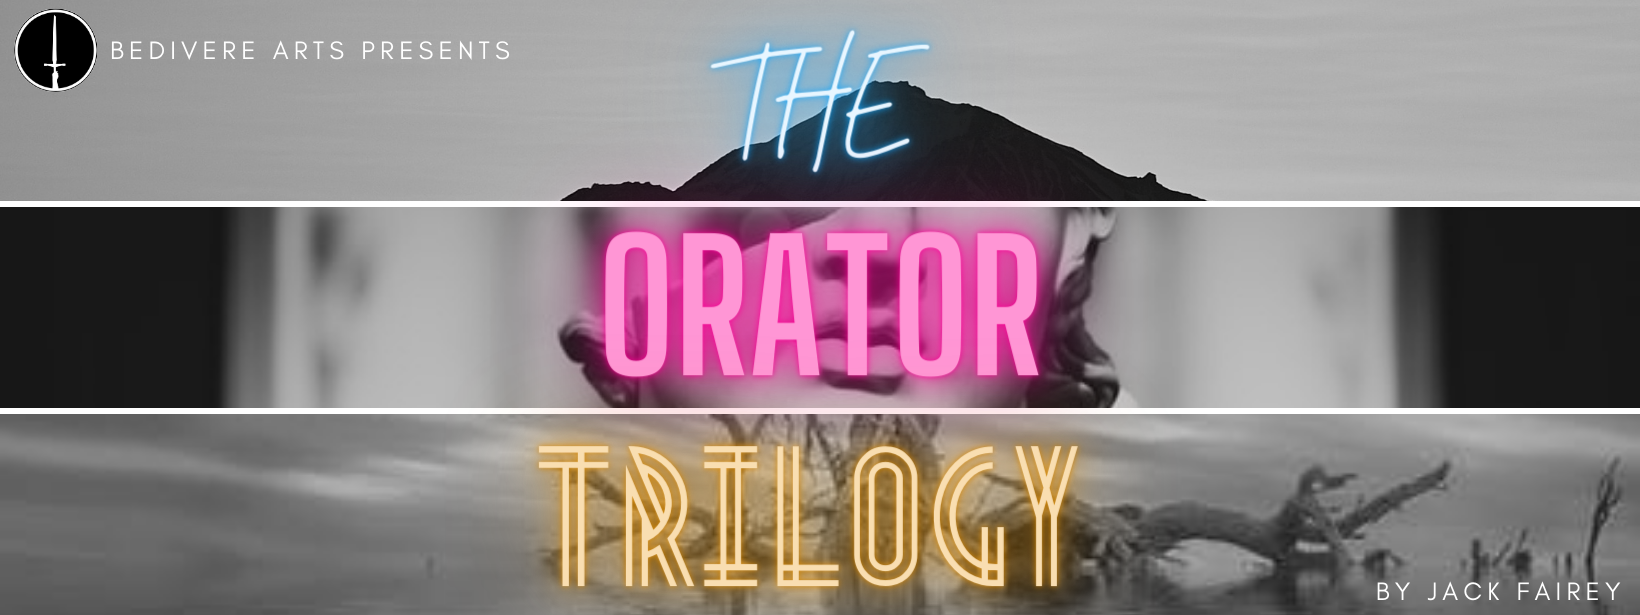 Orator Trilogy Banner